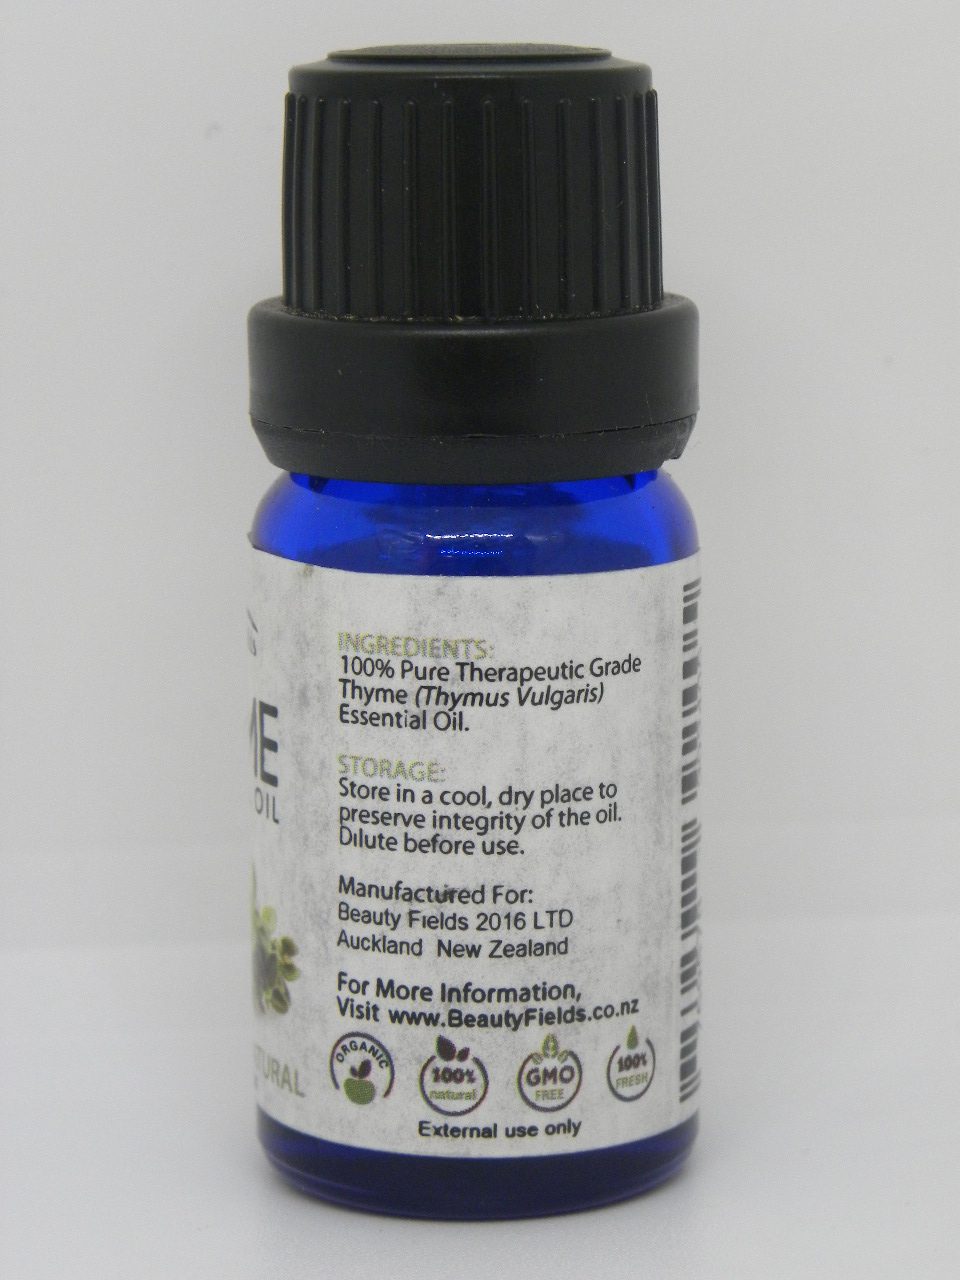 Thyme oil